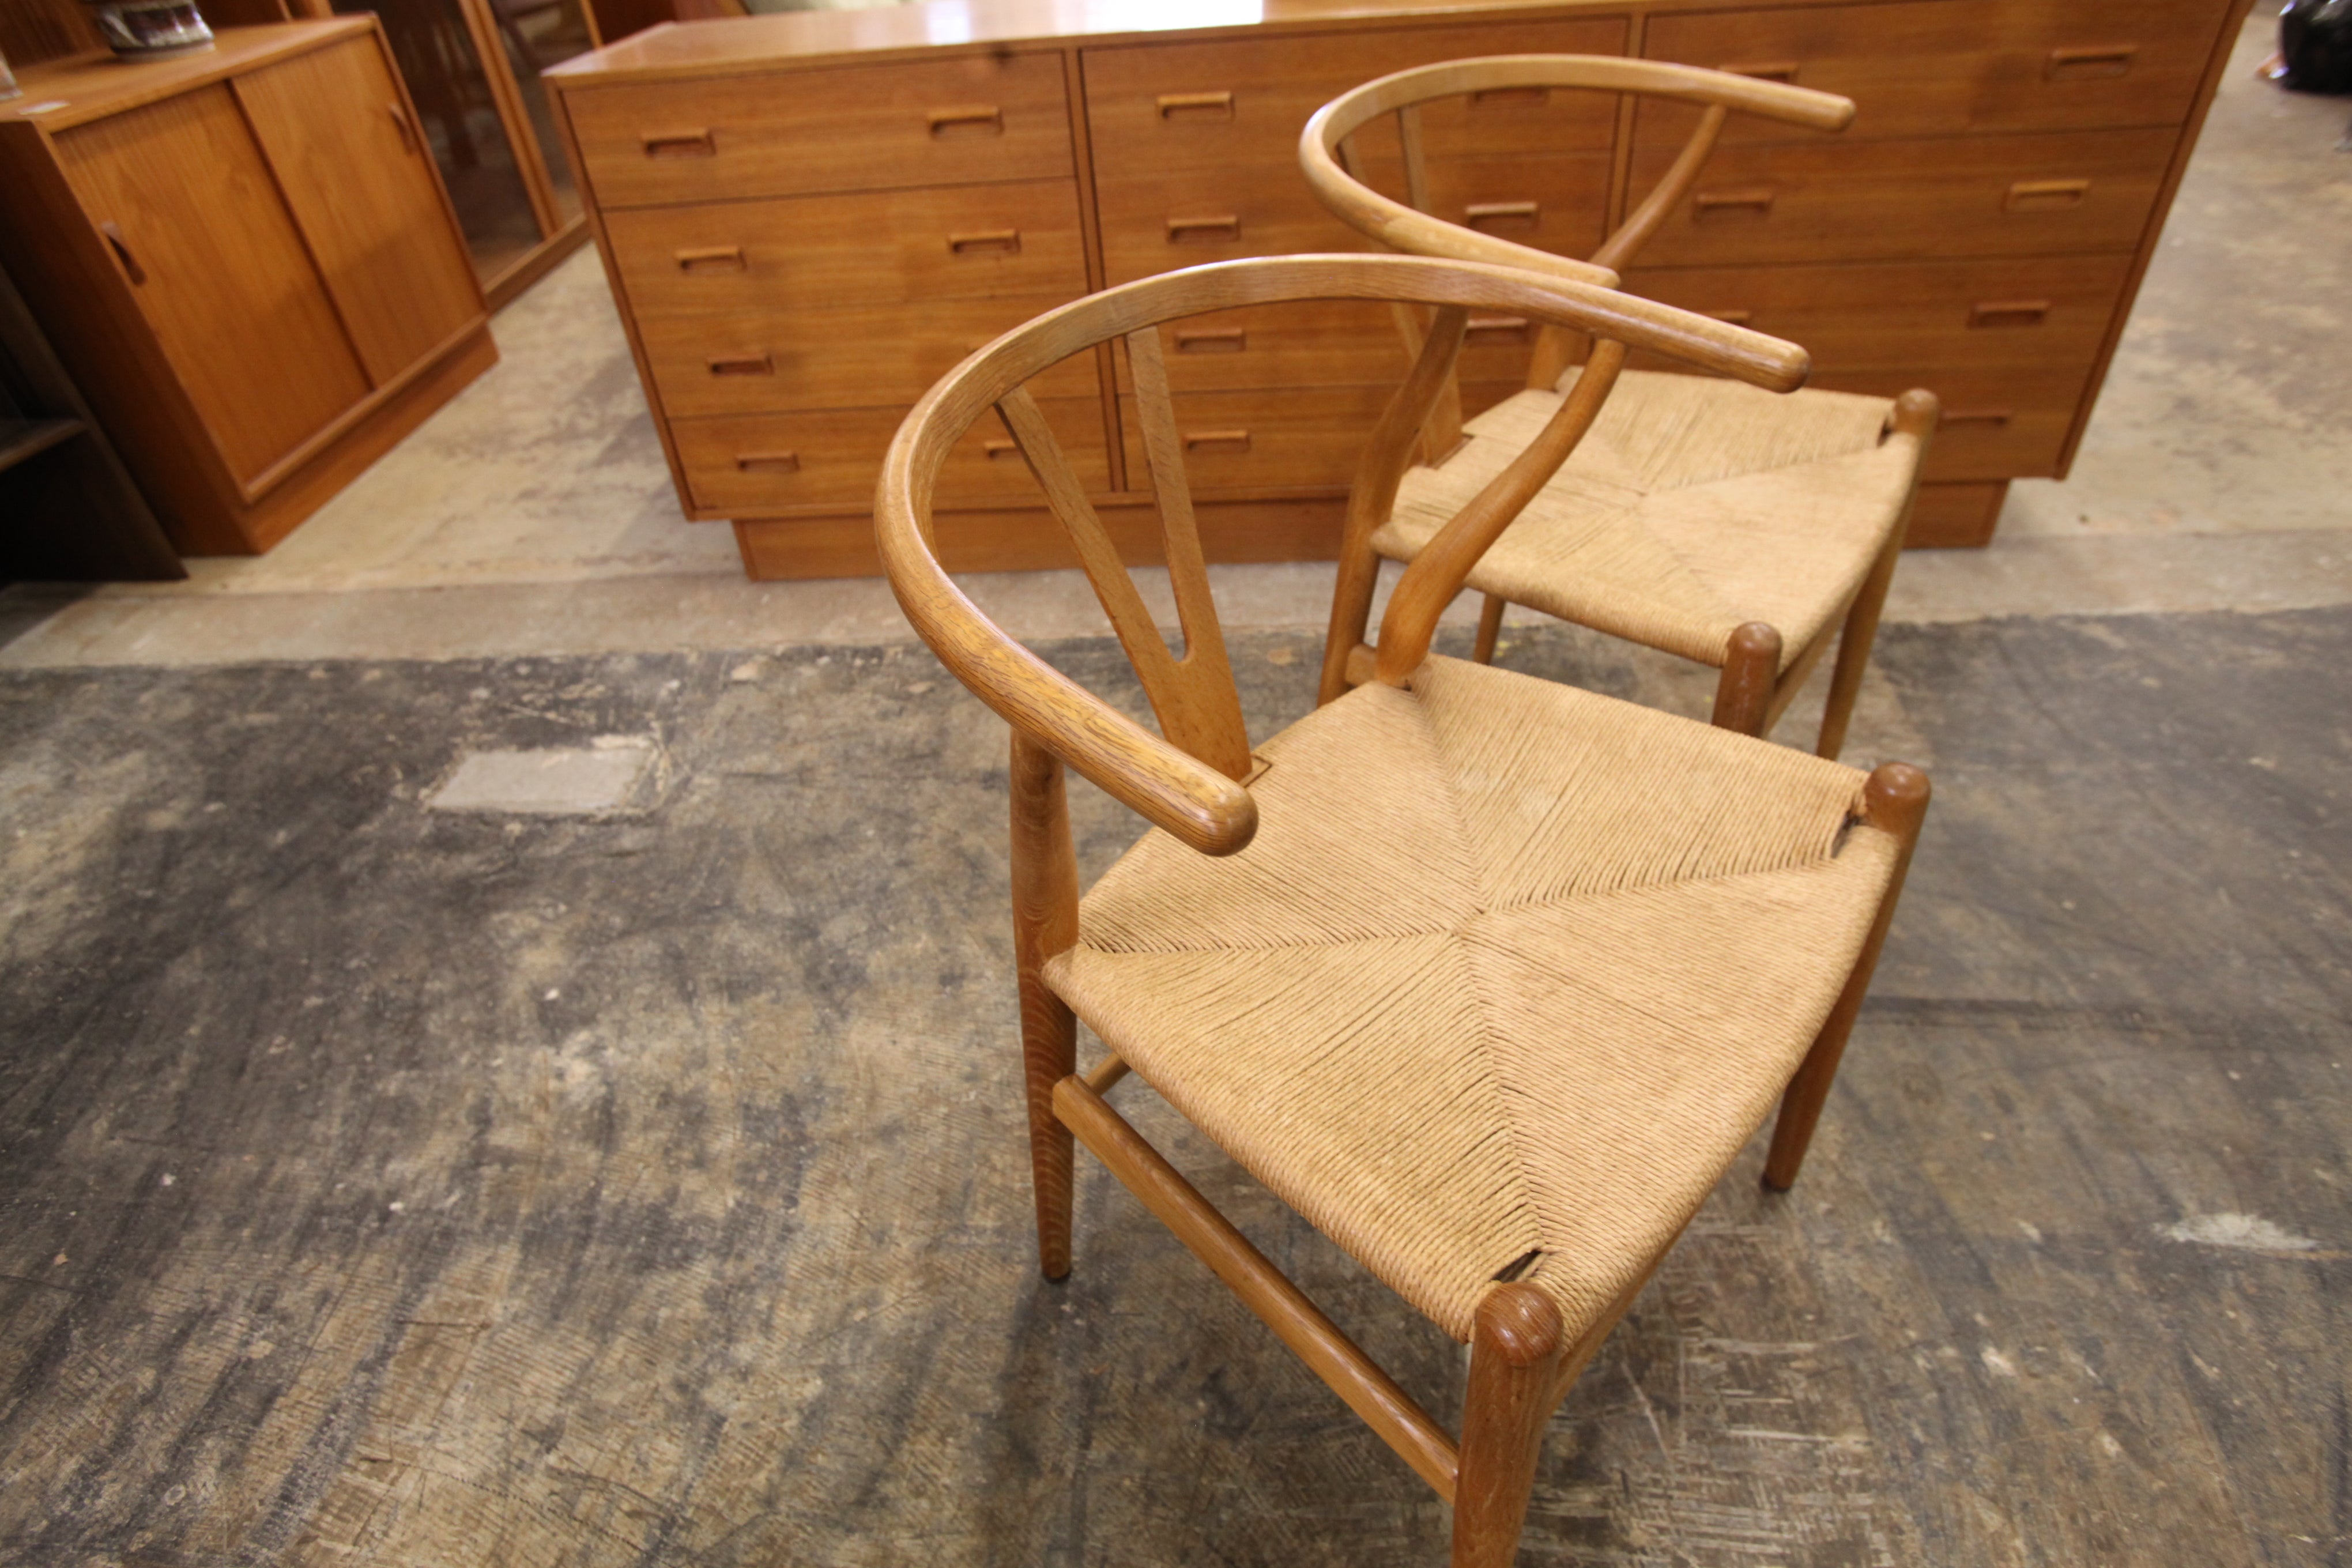 Original Hans Wegner "Wishbone" Chairs by Carl Hansen & Son